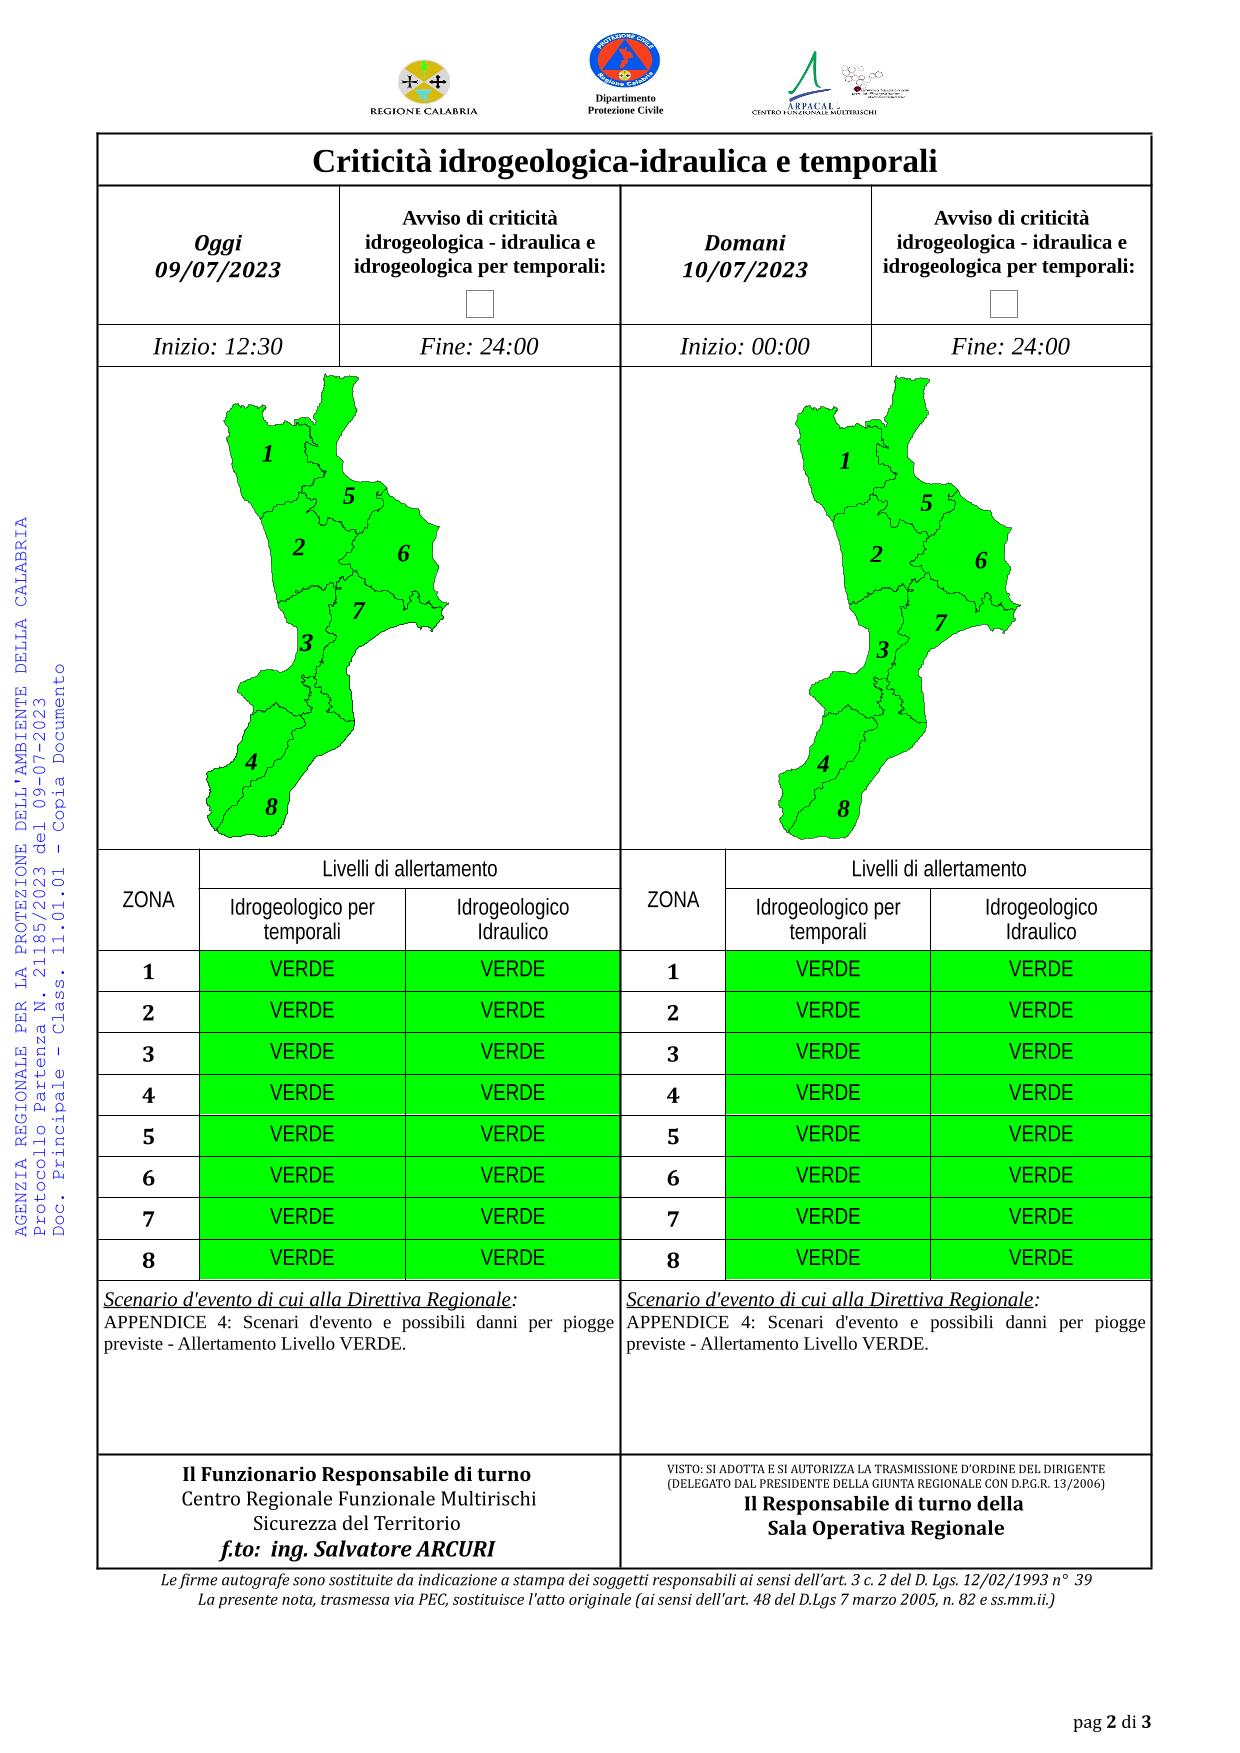 Criticità idrogeologica-idraulica e temporali in Calabria 09-07-2023